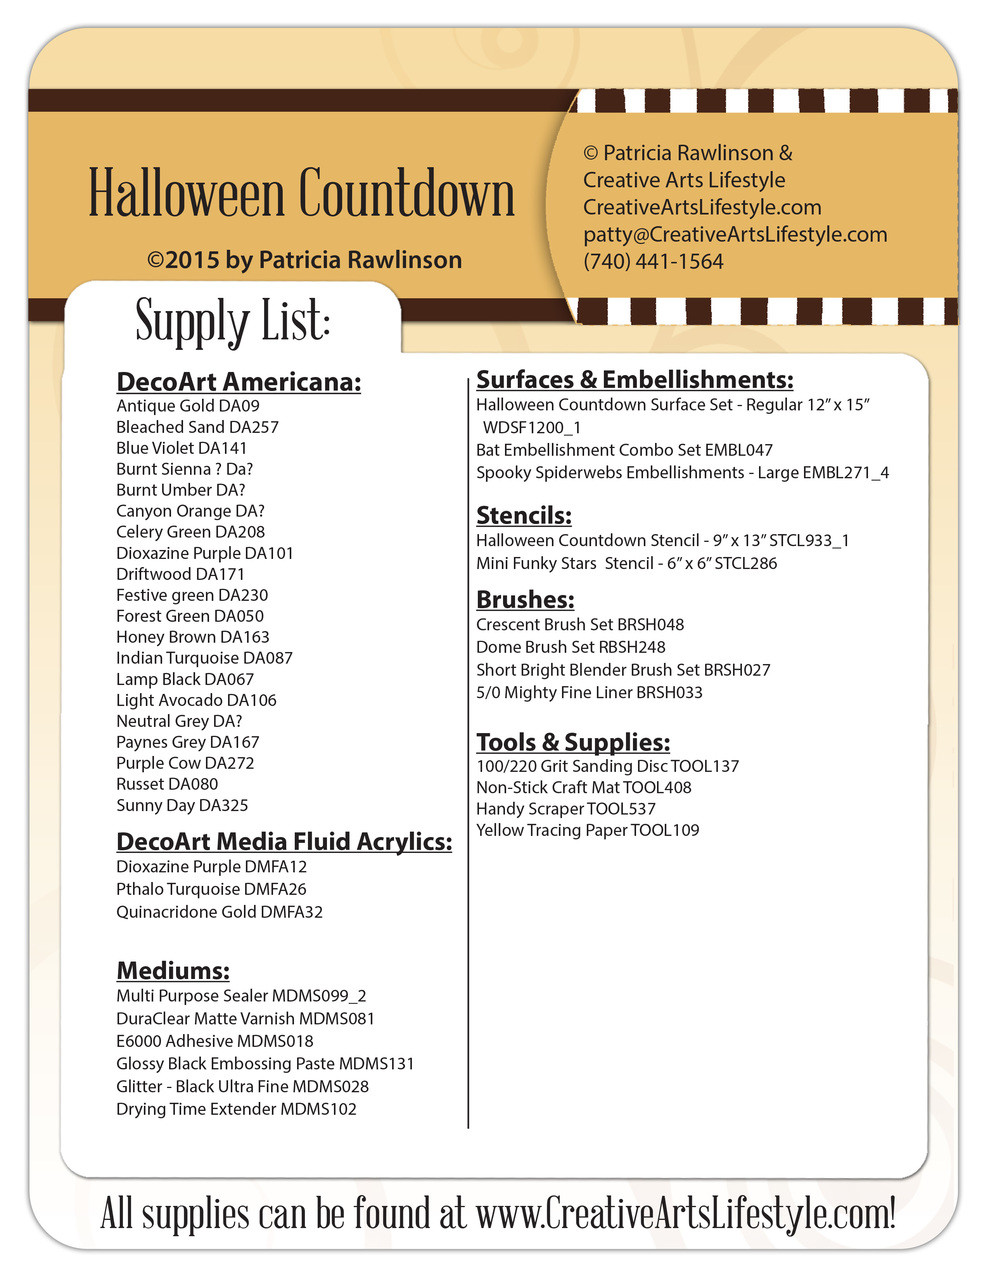 Halloween Countdown - E-Packet - Patricia Rawlinson